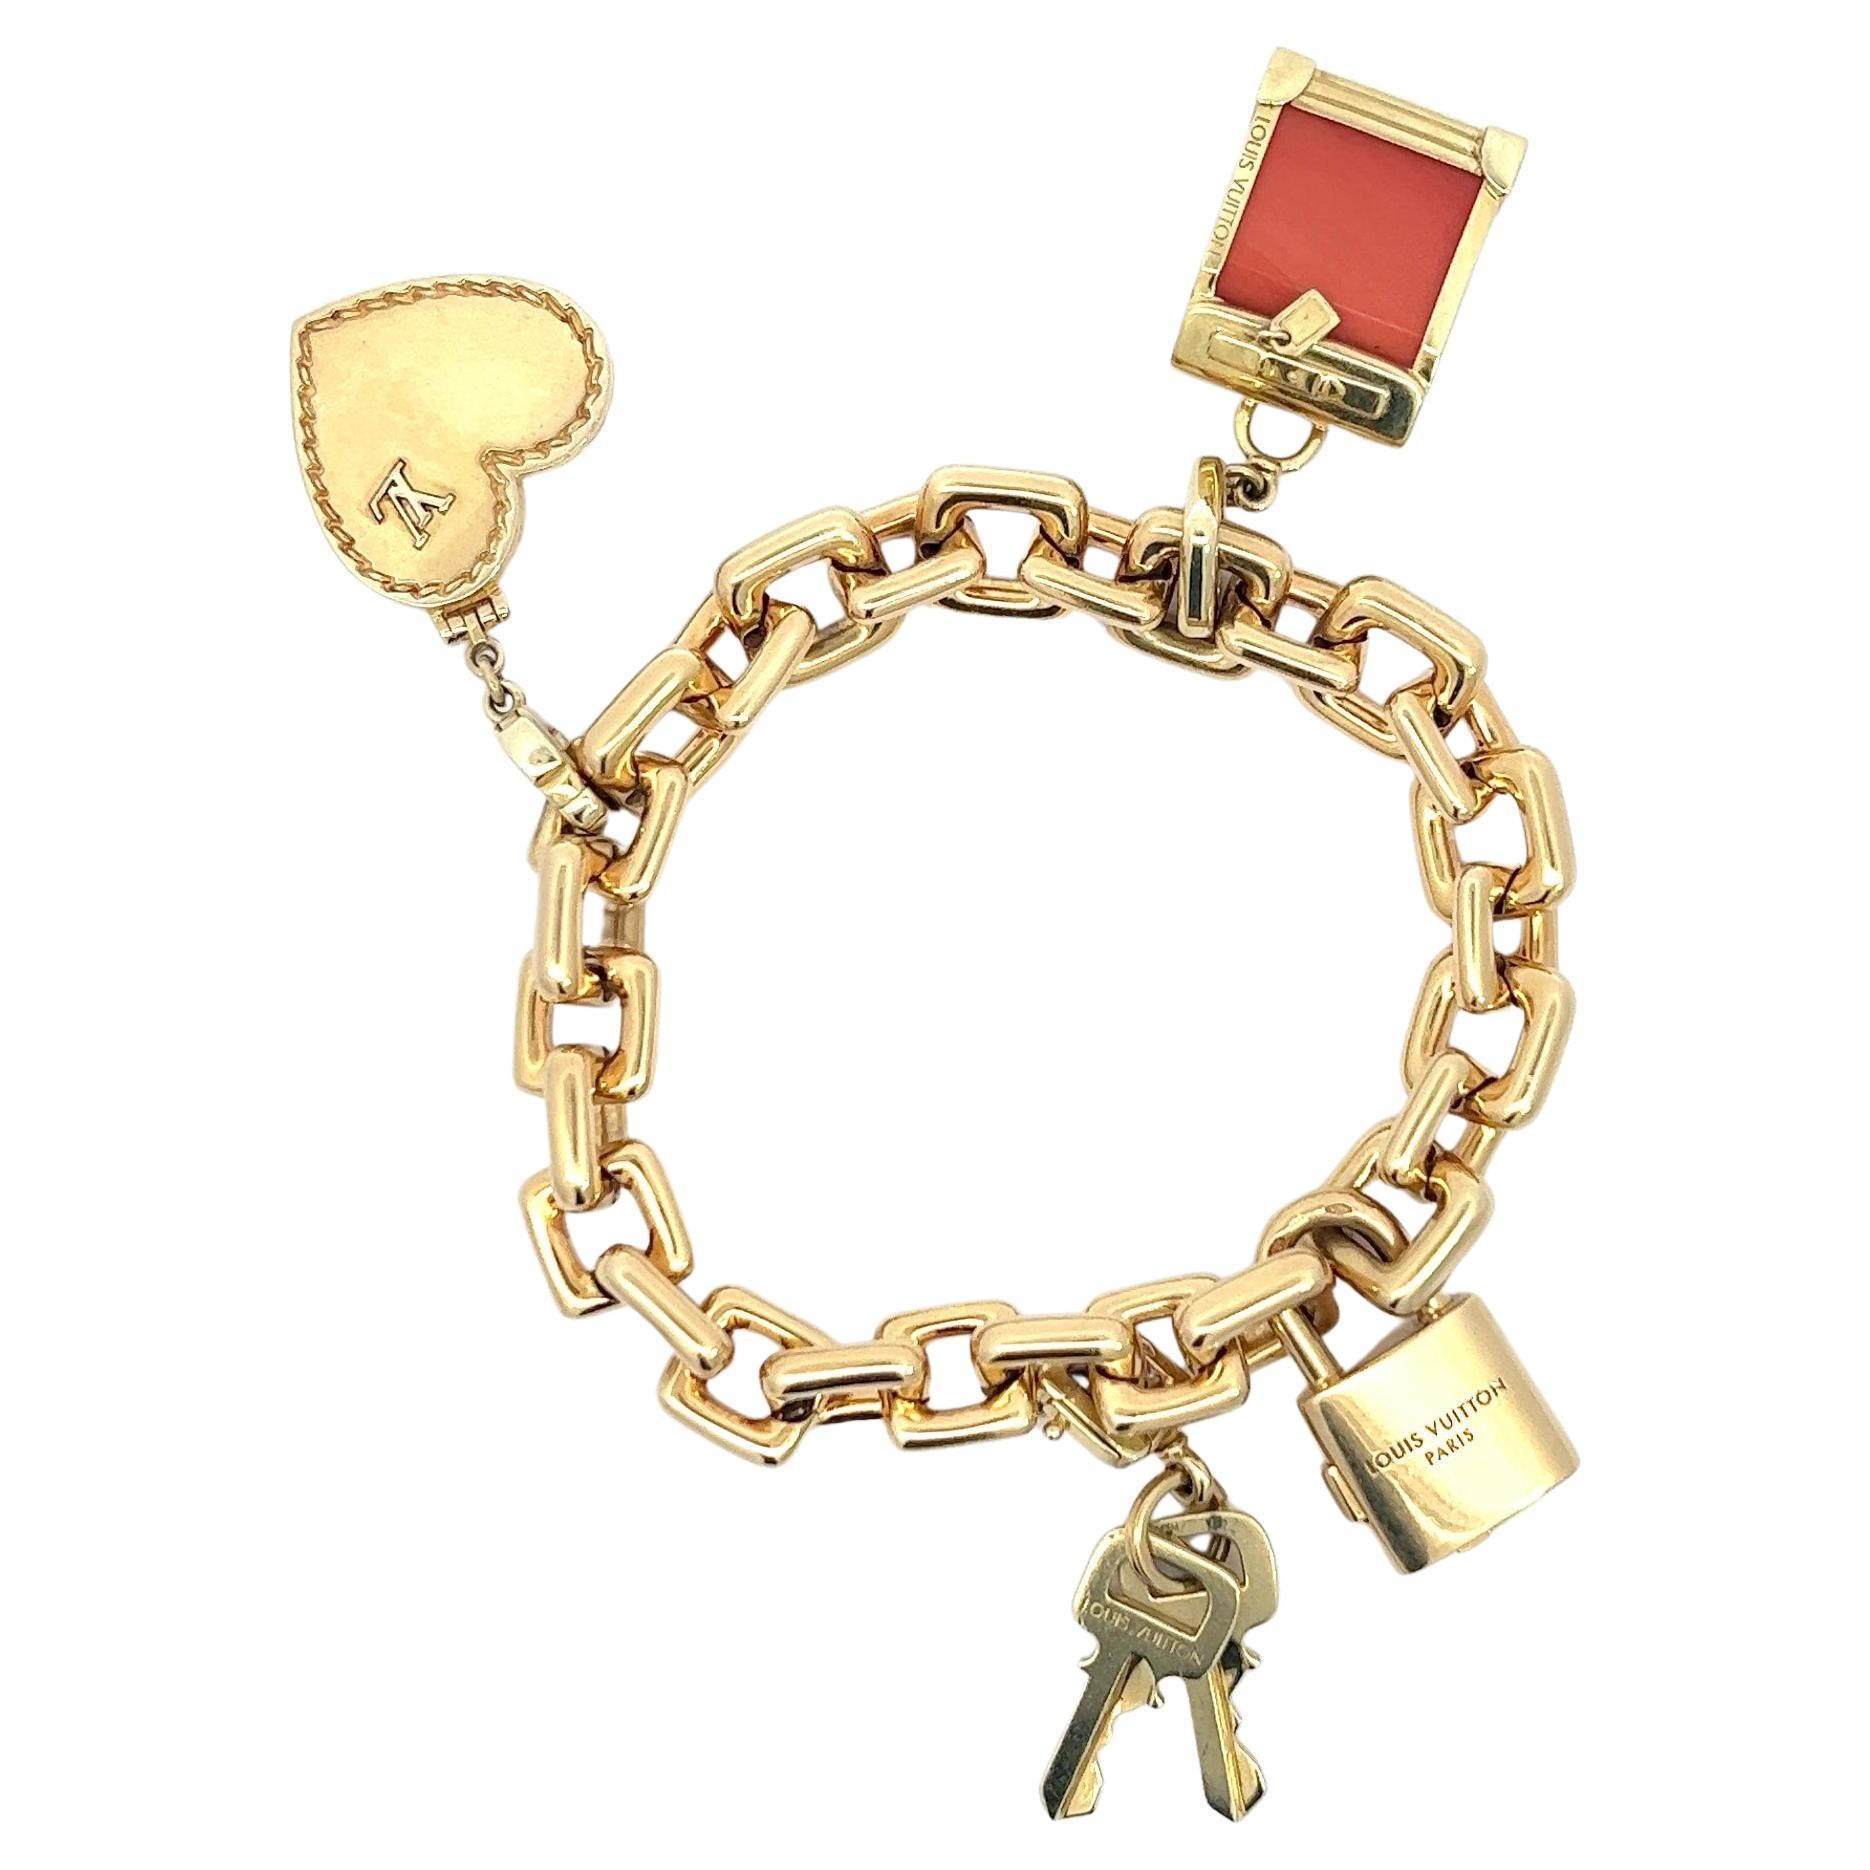 An 18k yellow gold "Padlock" bracelet with original box by Louis Vuitton. For Sale